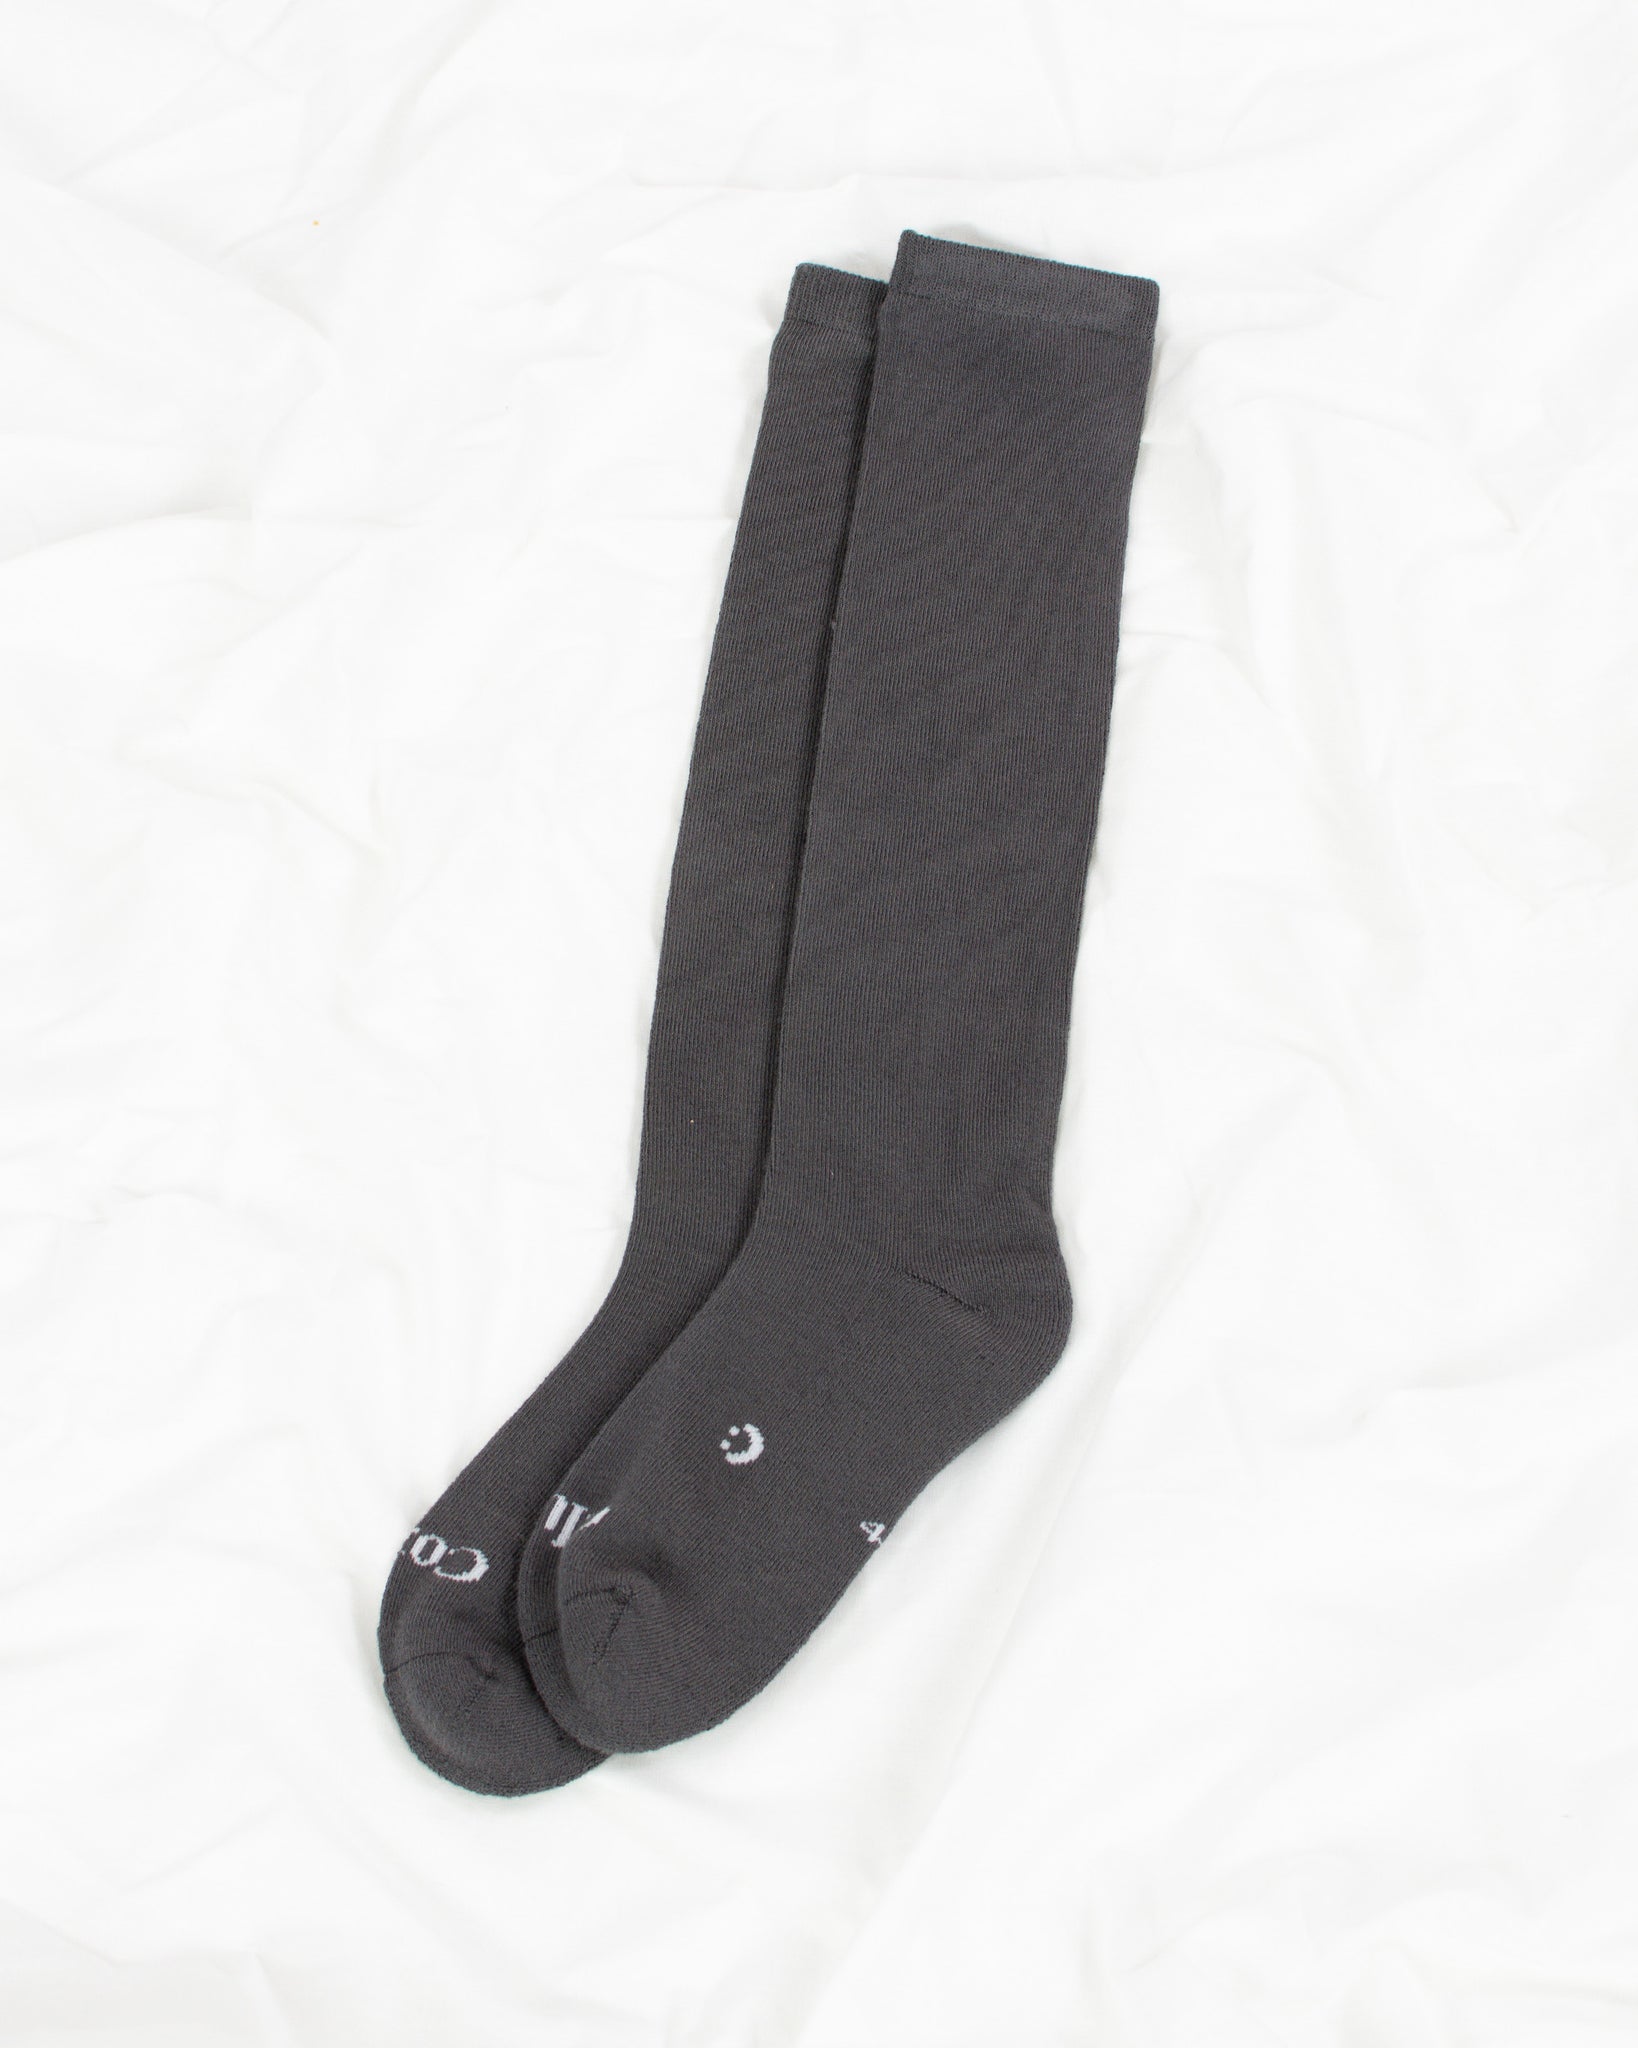 Everyday Knee-High Seamless Feel Socks (Kids) - Charcoal